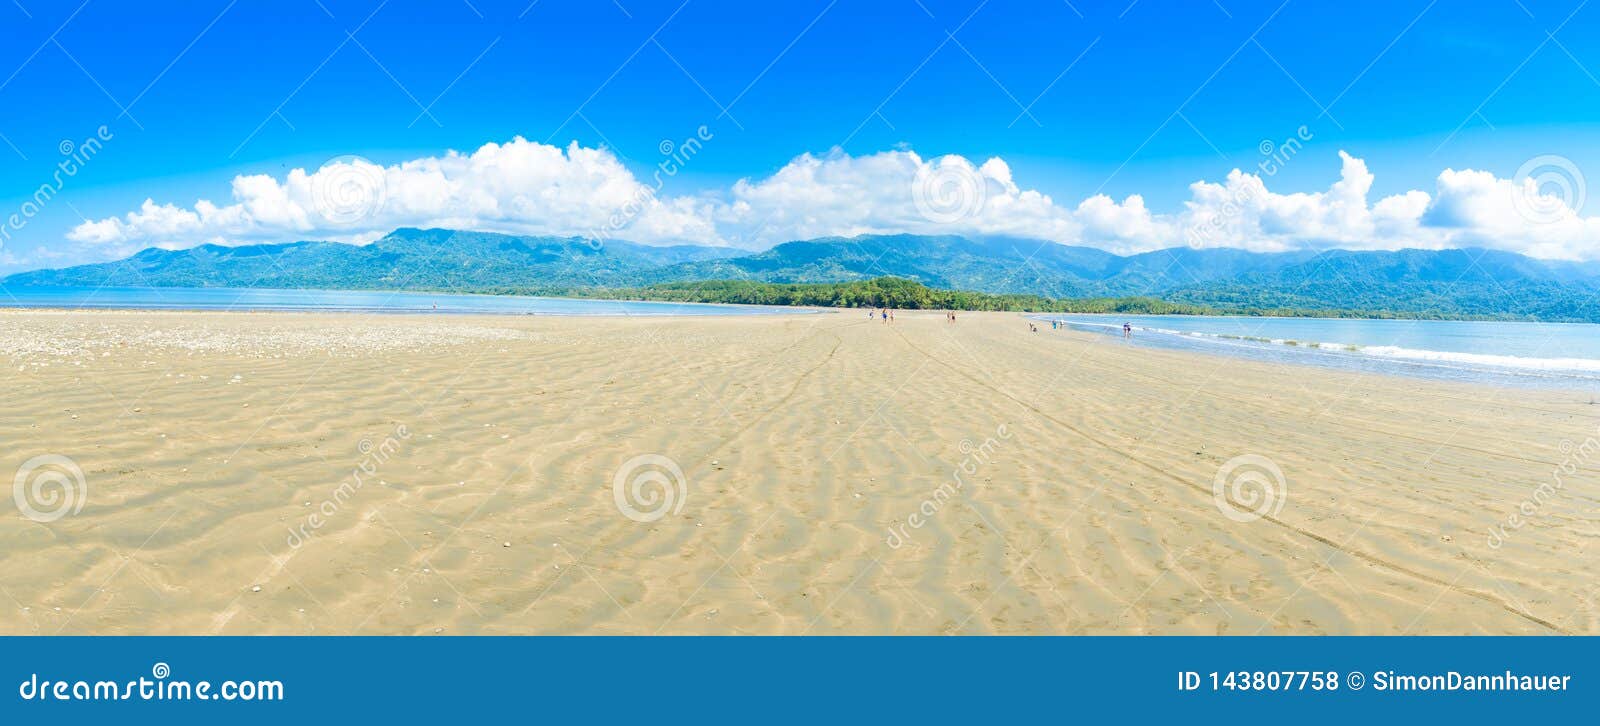 panorama of marino ballena national park in uvita - punta uvita - beautiful beaches and tropical forest at pacific coast of costa